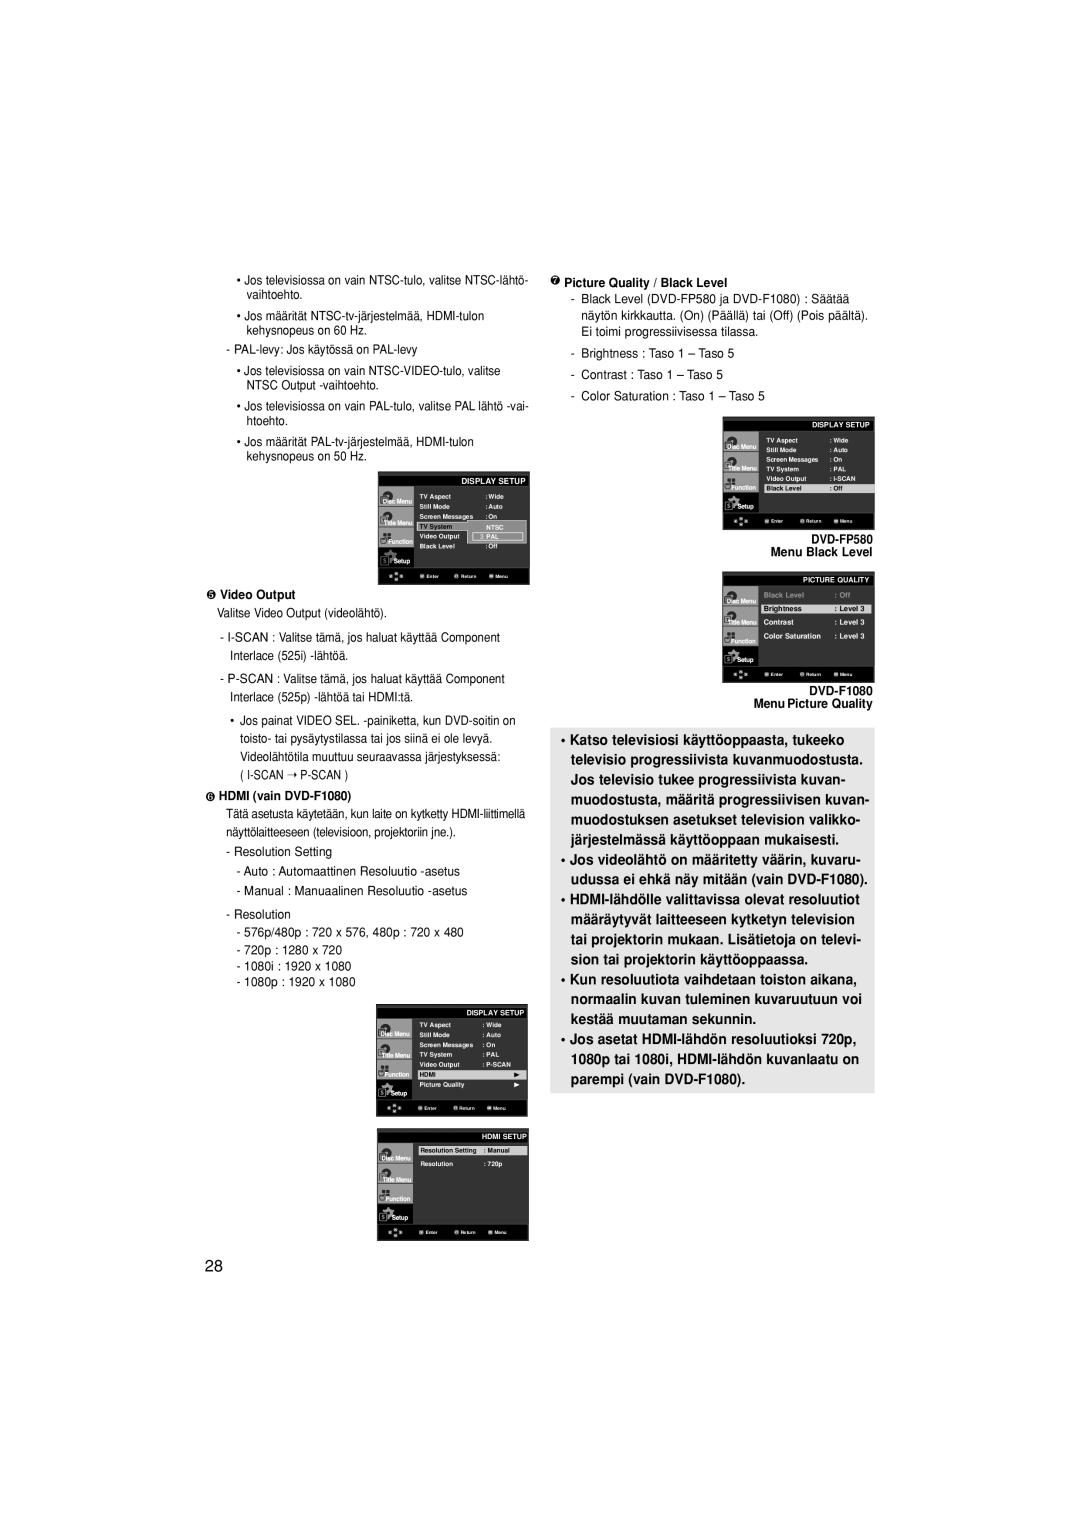 Samsung DVD-F1080W/XEE, DVD-F1080/XEE manual ❺ Video Output, ❻ Hdmi vain DVD-F1080 